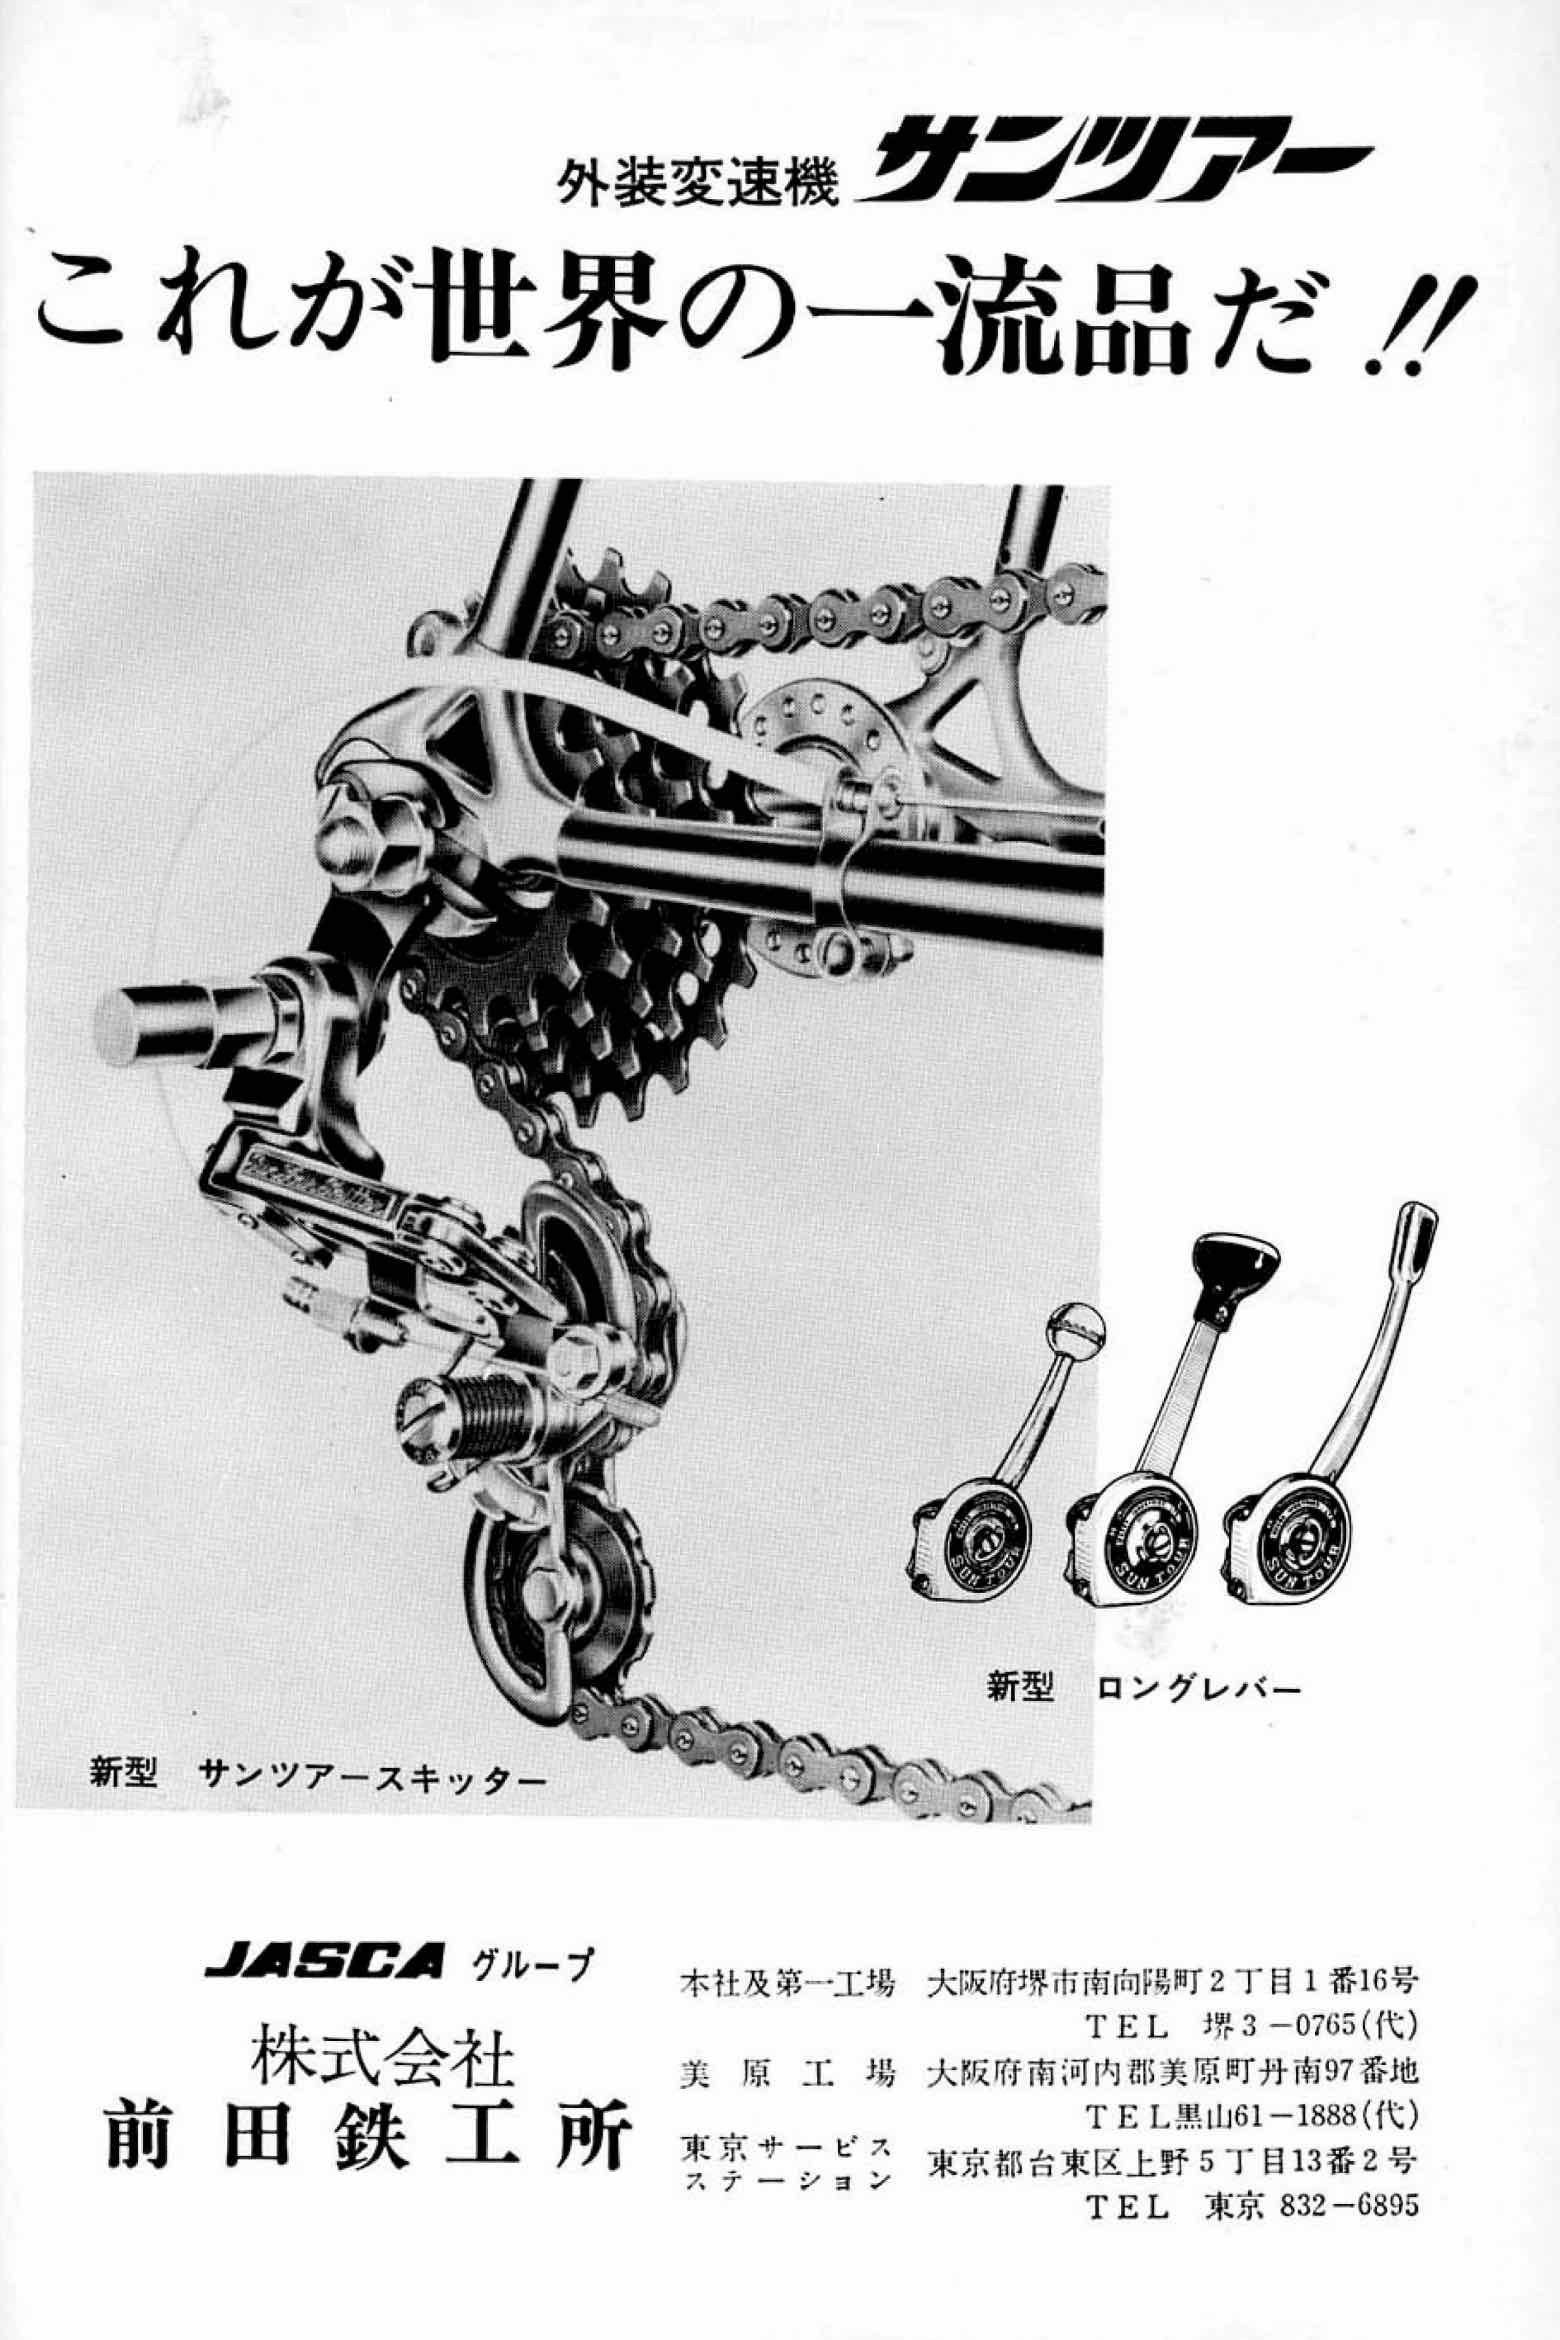 New Cycling May 1967 - SunTour advert main image